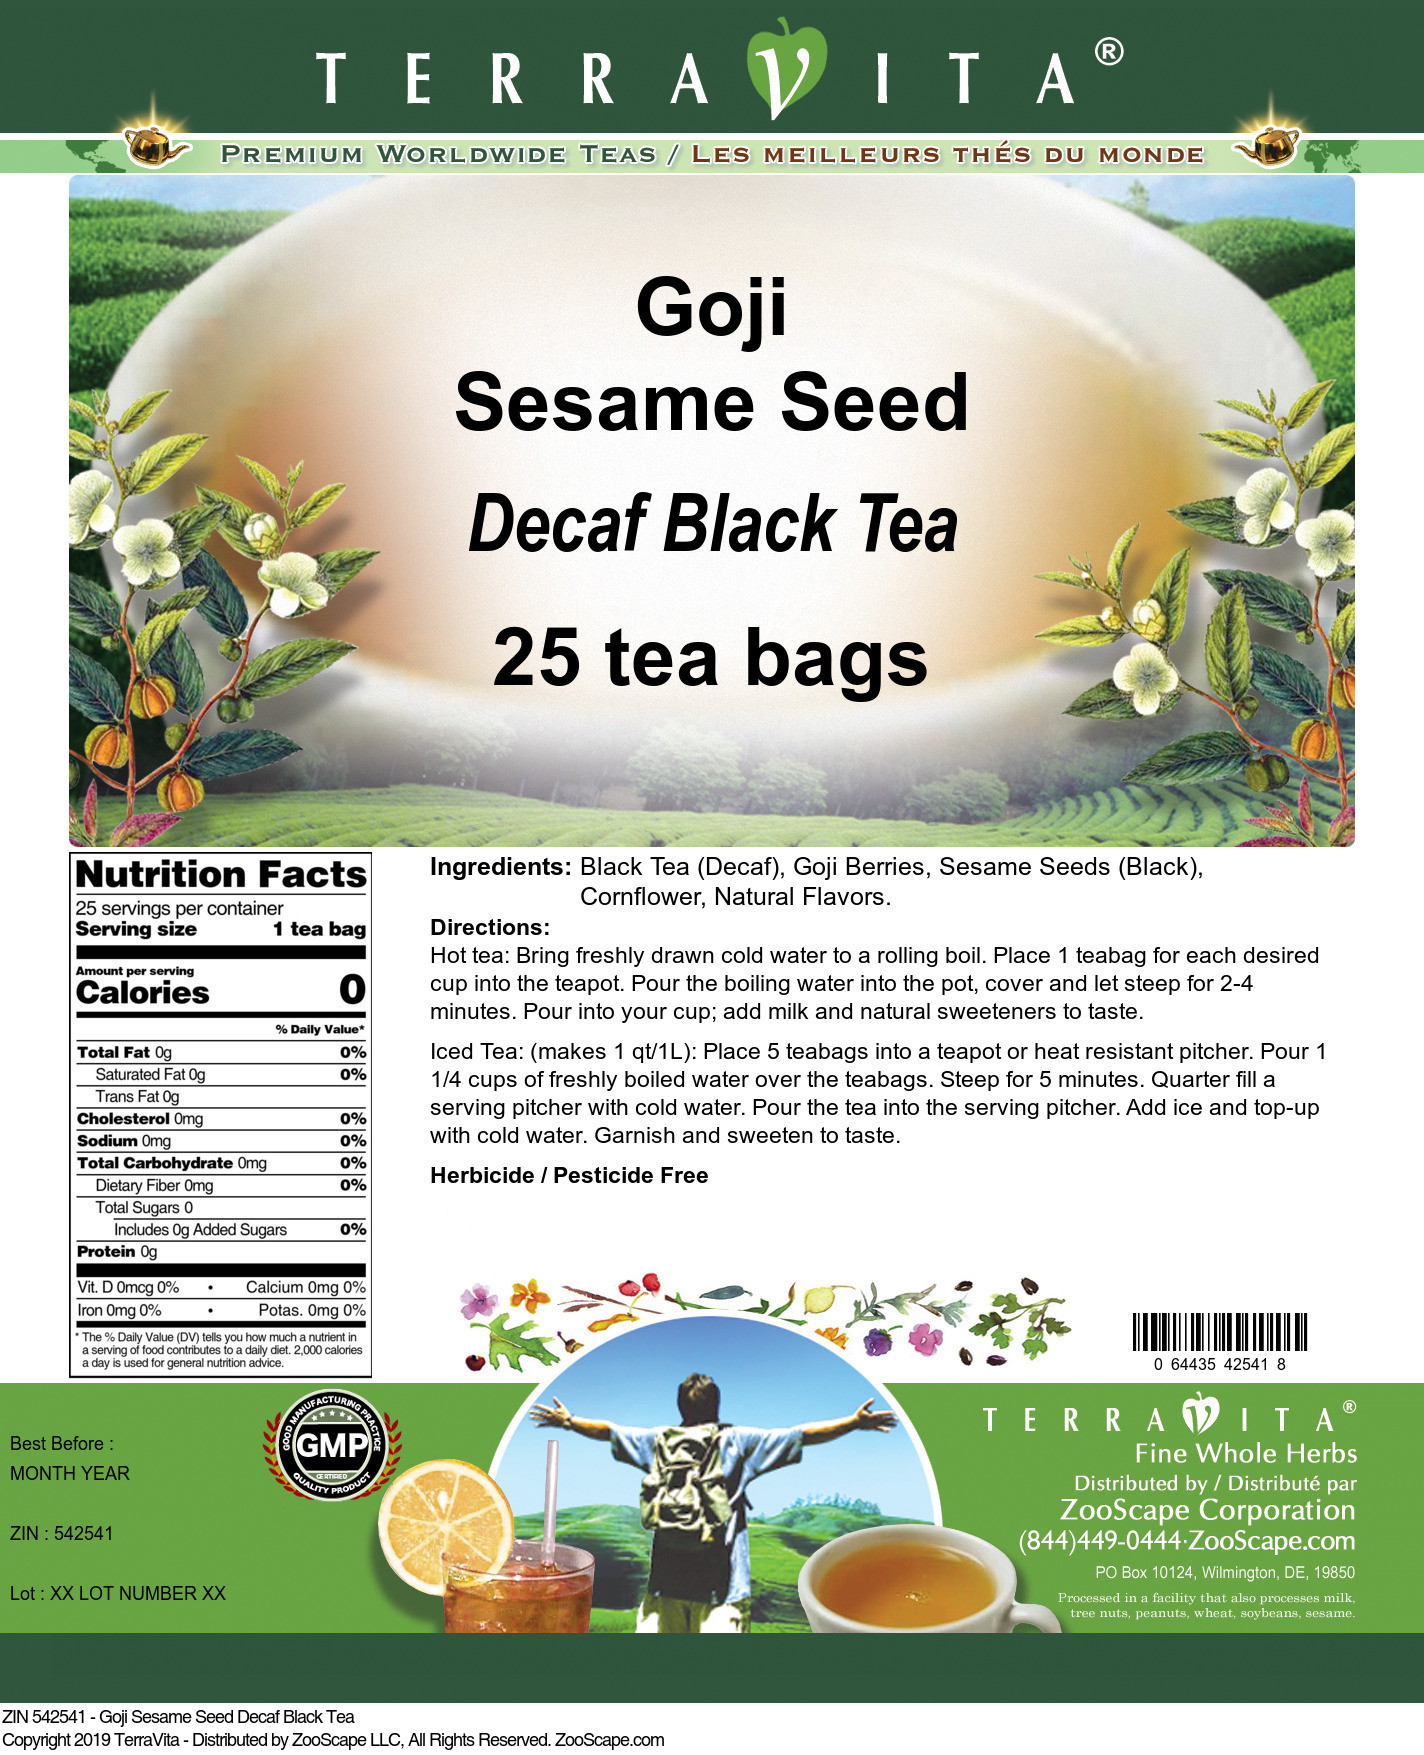 Goji Sesame Seed Decaf Black Tea - Label